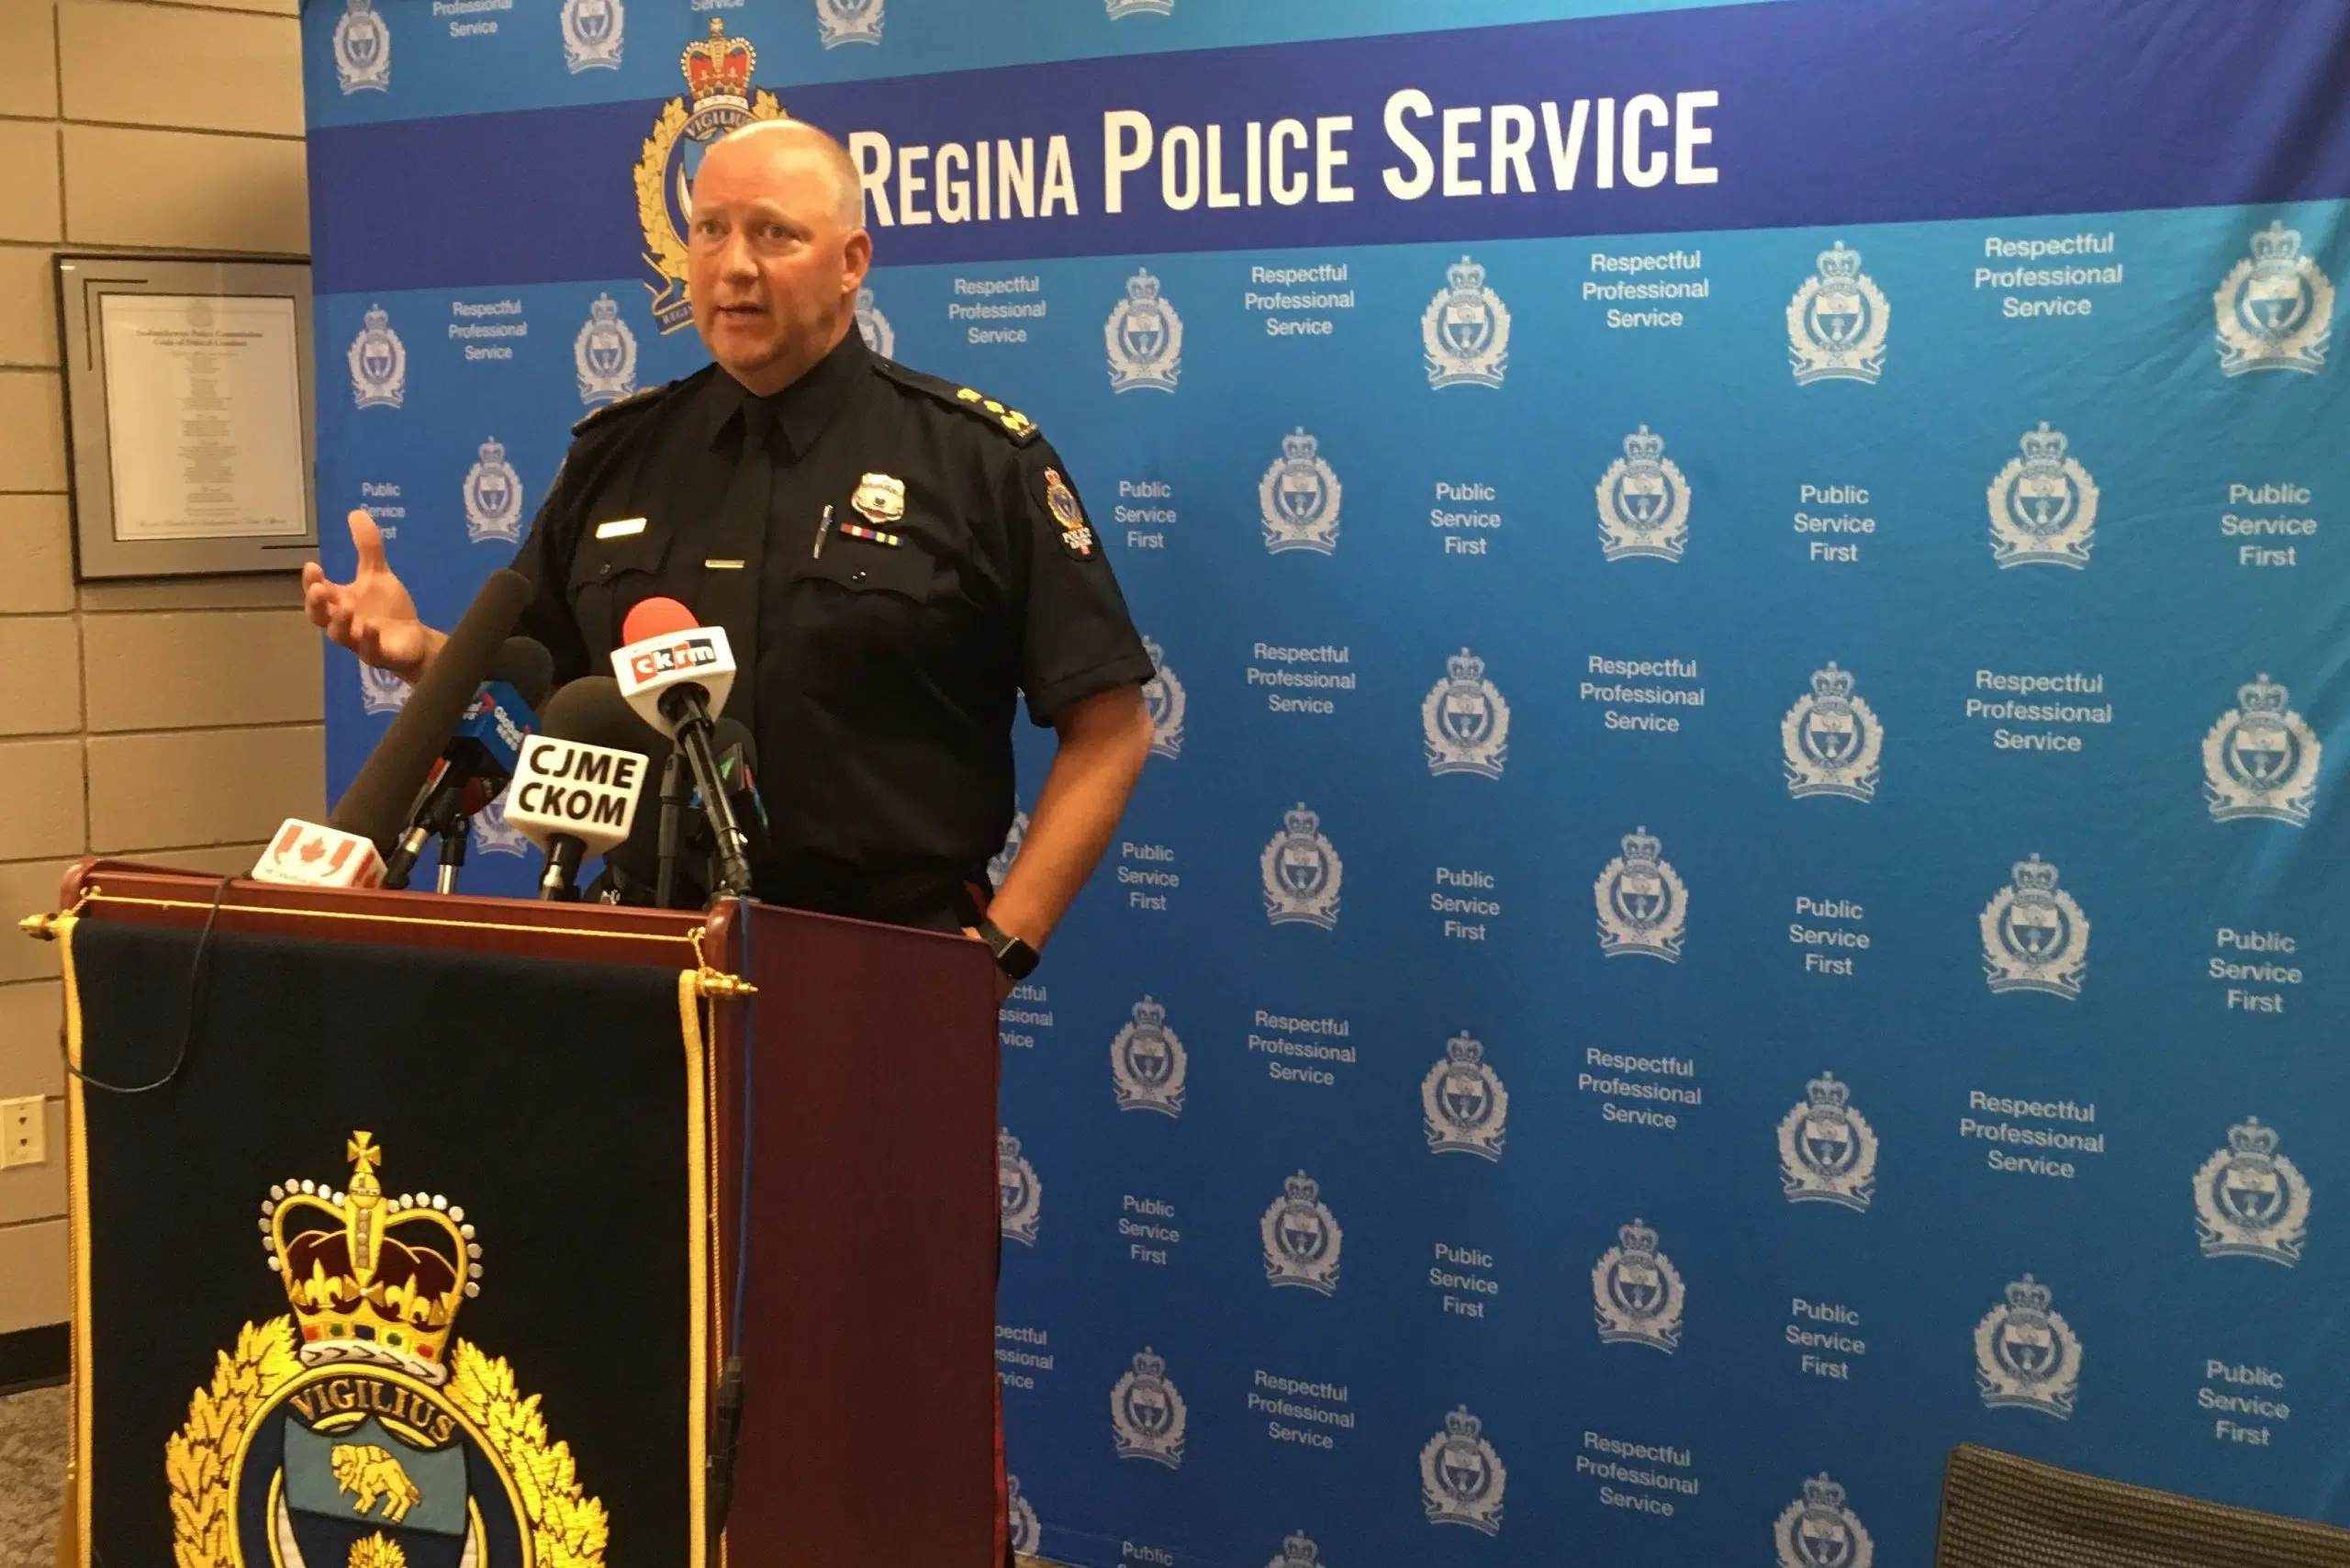 Drug addictions are fuelling property crimes: Regina police chief